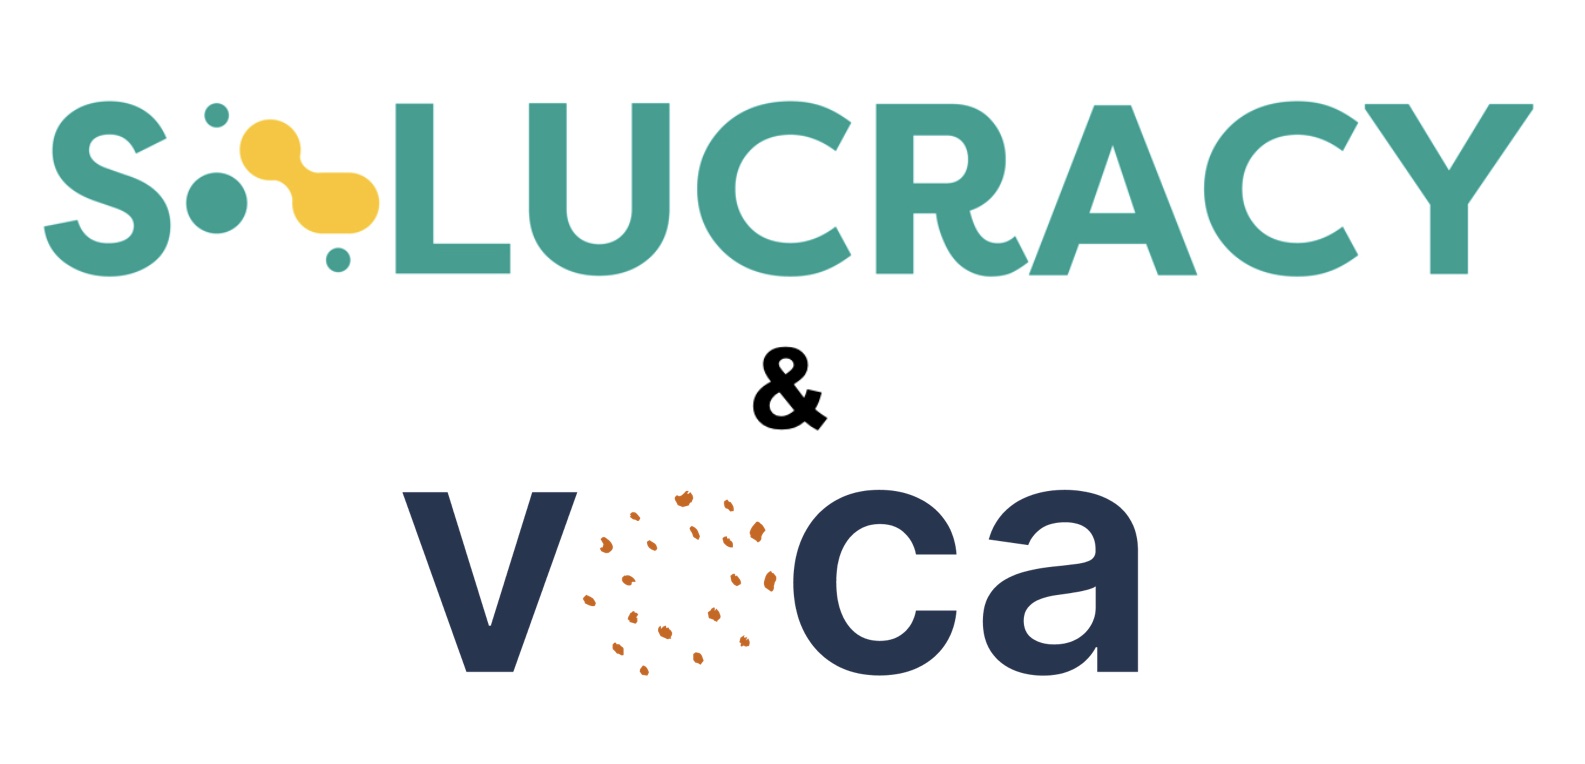 Solucracy&Voca logo.jpg